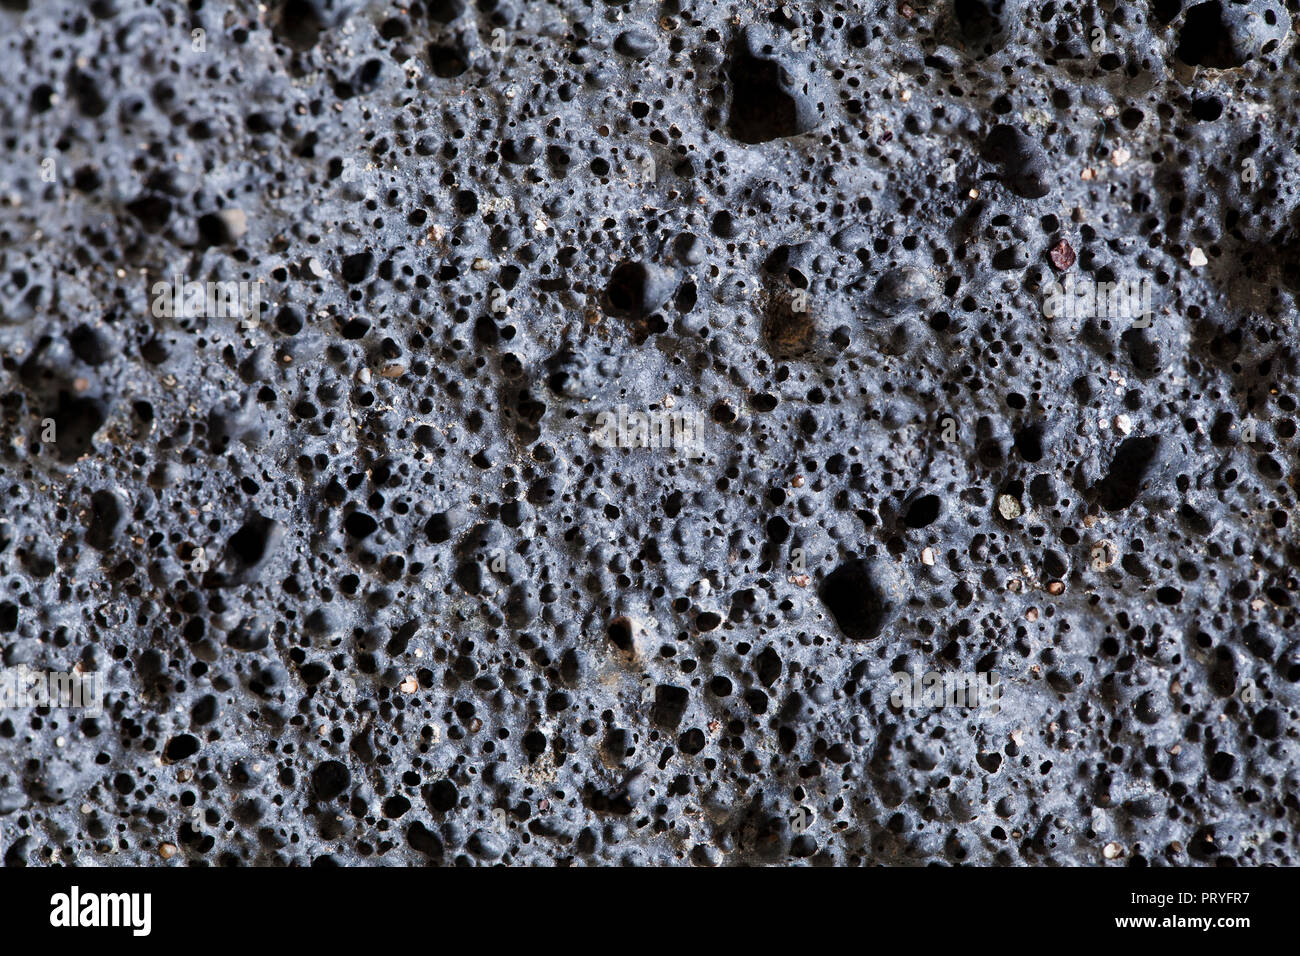 Close up of igneous rock (scoria, volcanic rock, lava rock - macro) showing vesicles, found in the Mojave desert, California - USA Stock Photo